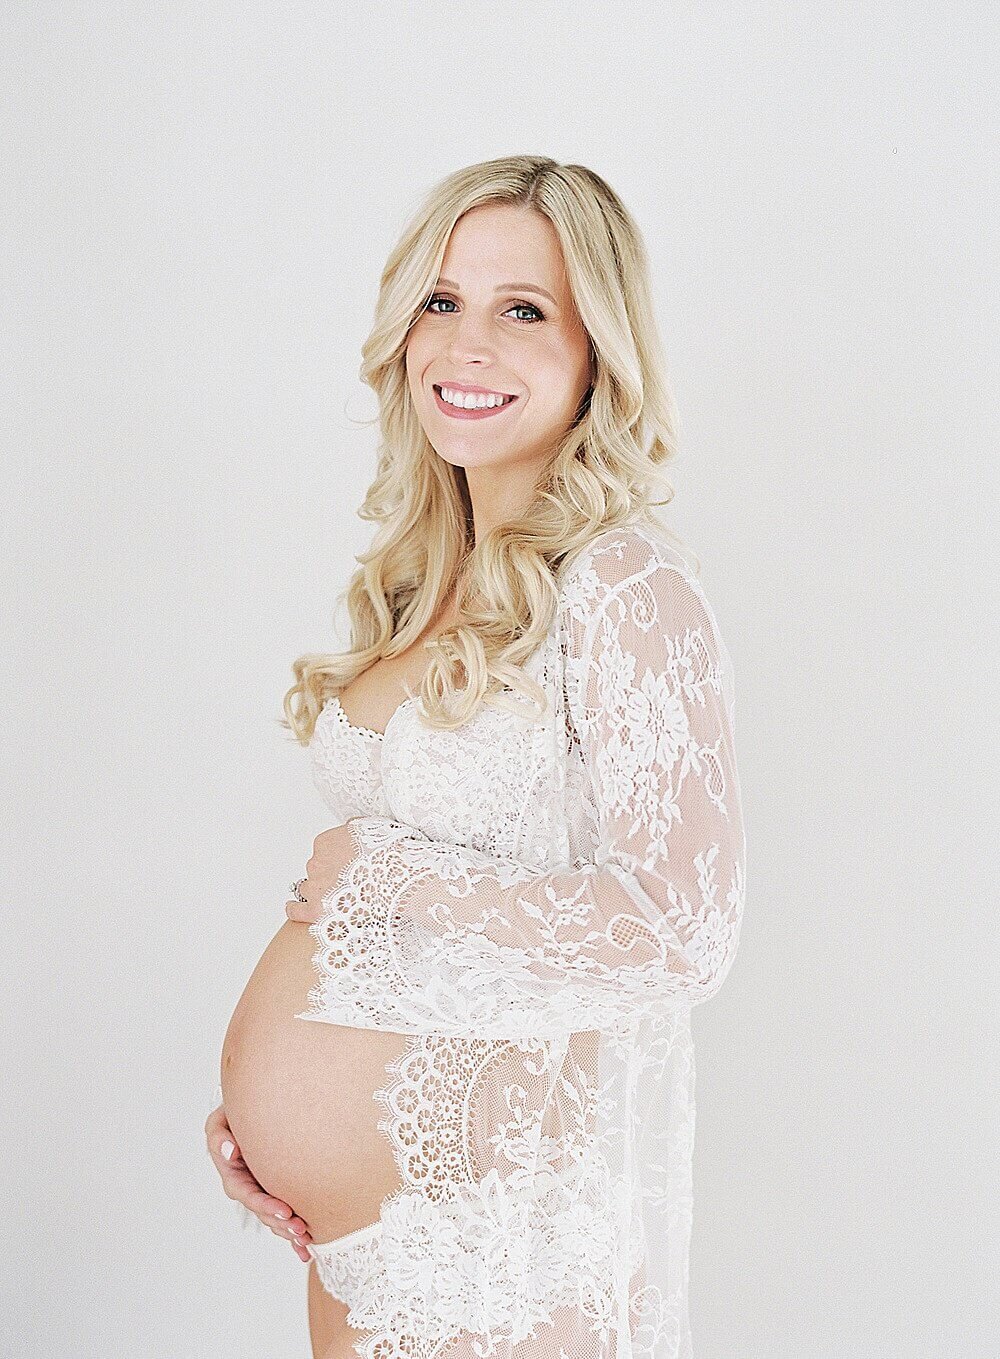 seattle-maternity-photographer-Jacqueline-Benet_0003